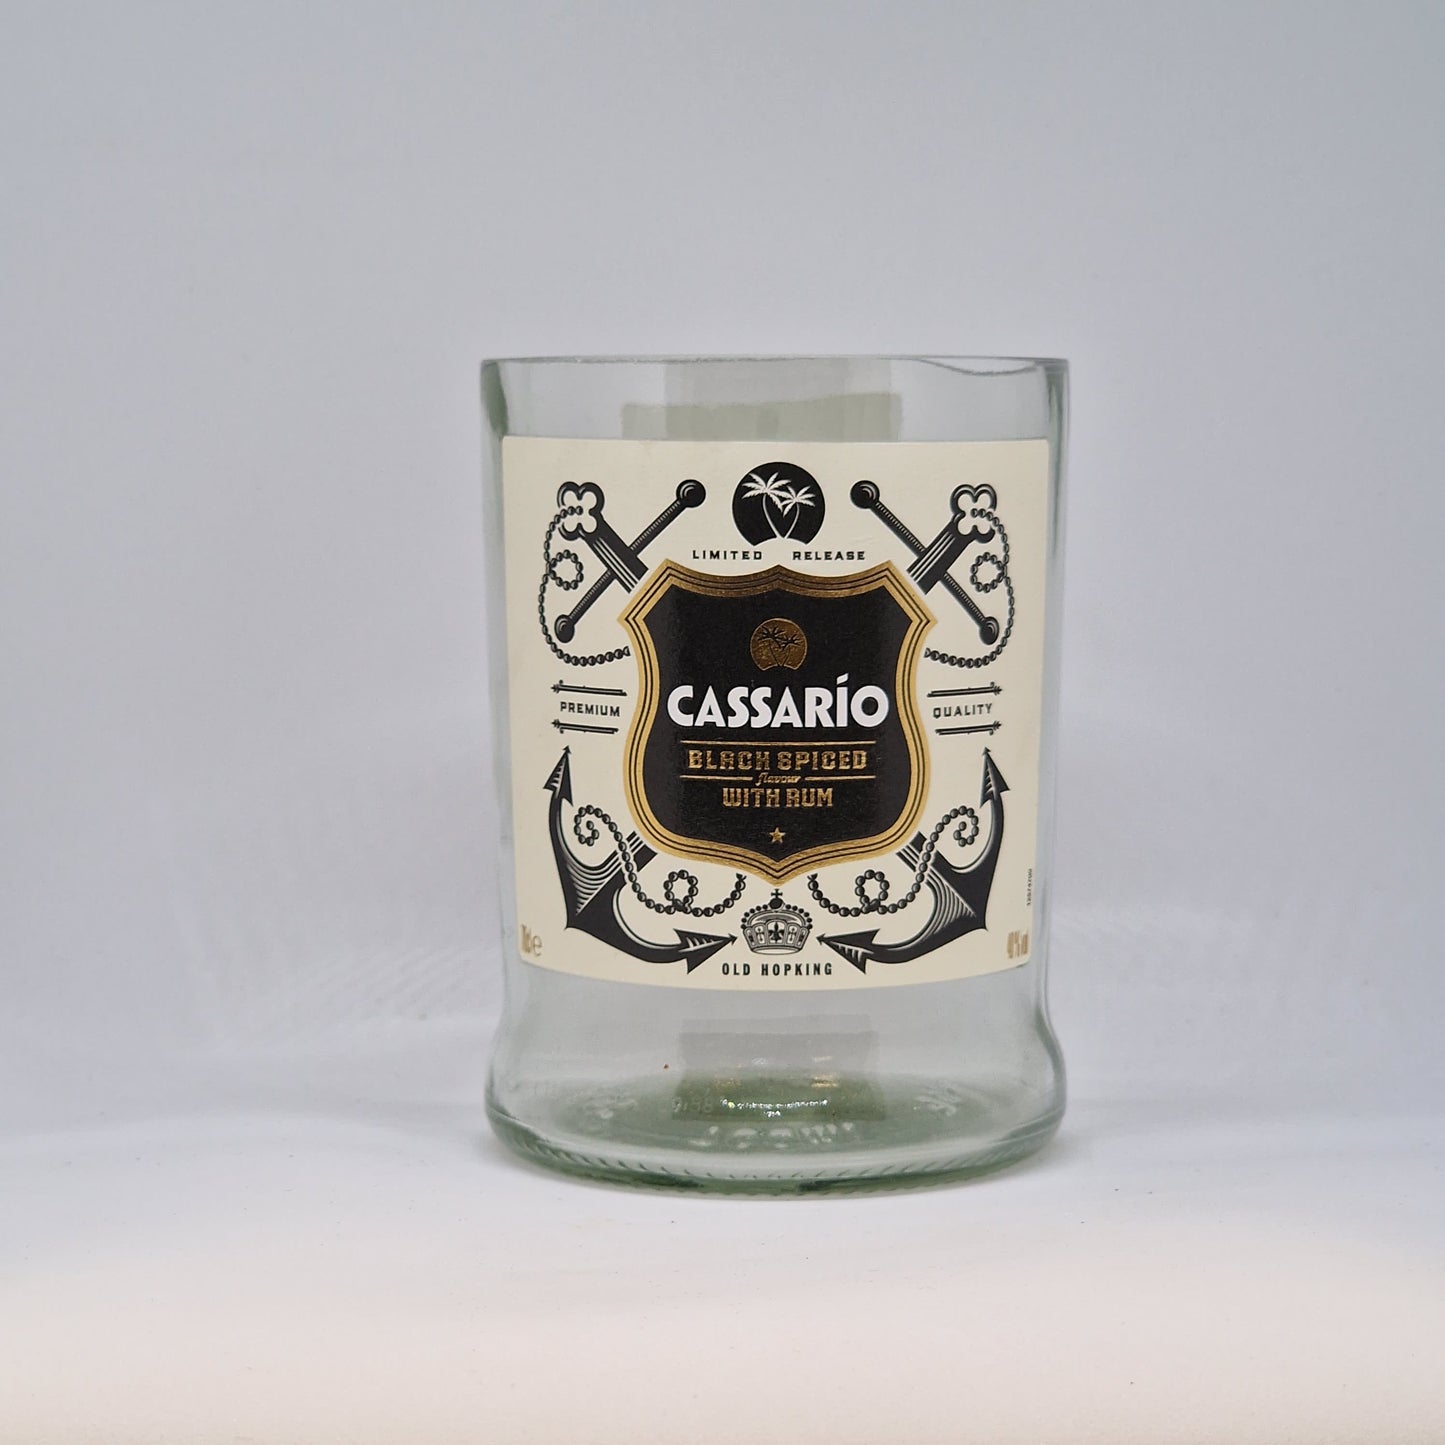 Cassario Black Spiced Rum Bottle Candle